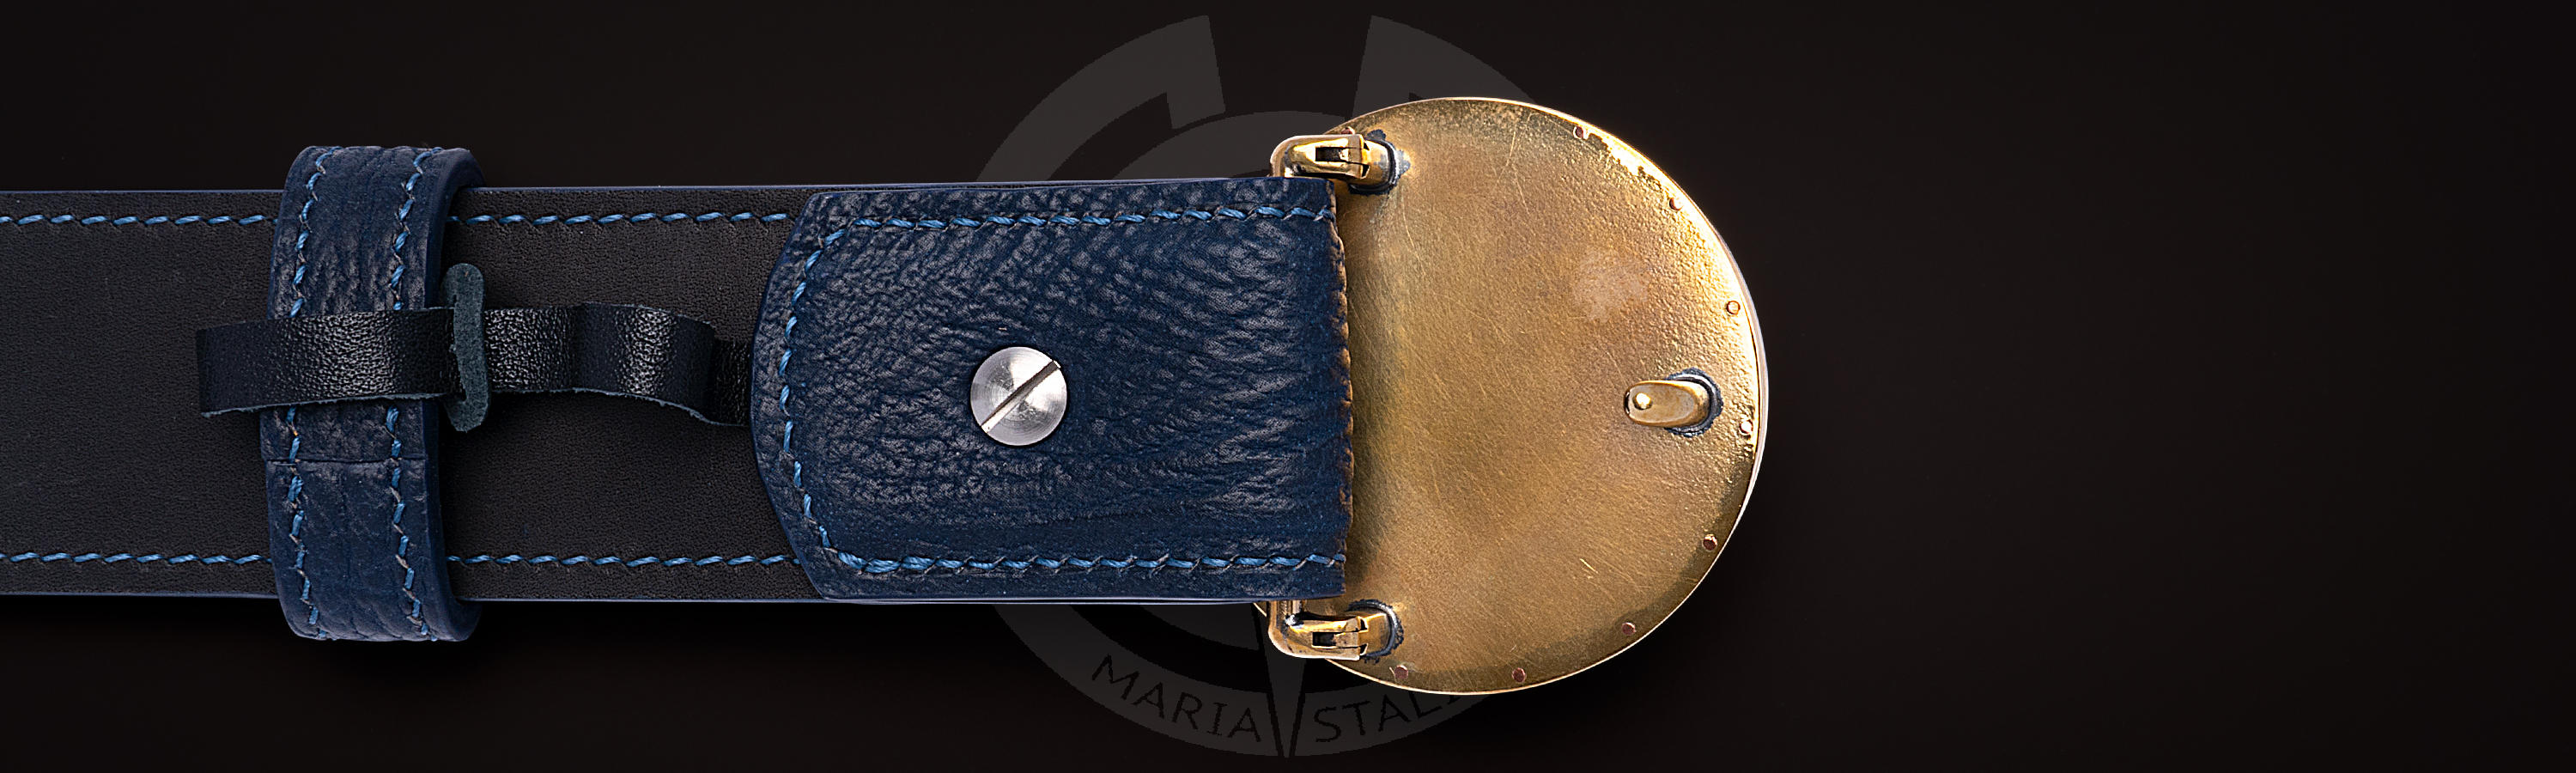 Handmade shark leather belt with designer buckle